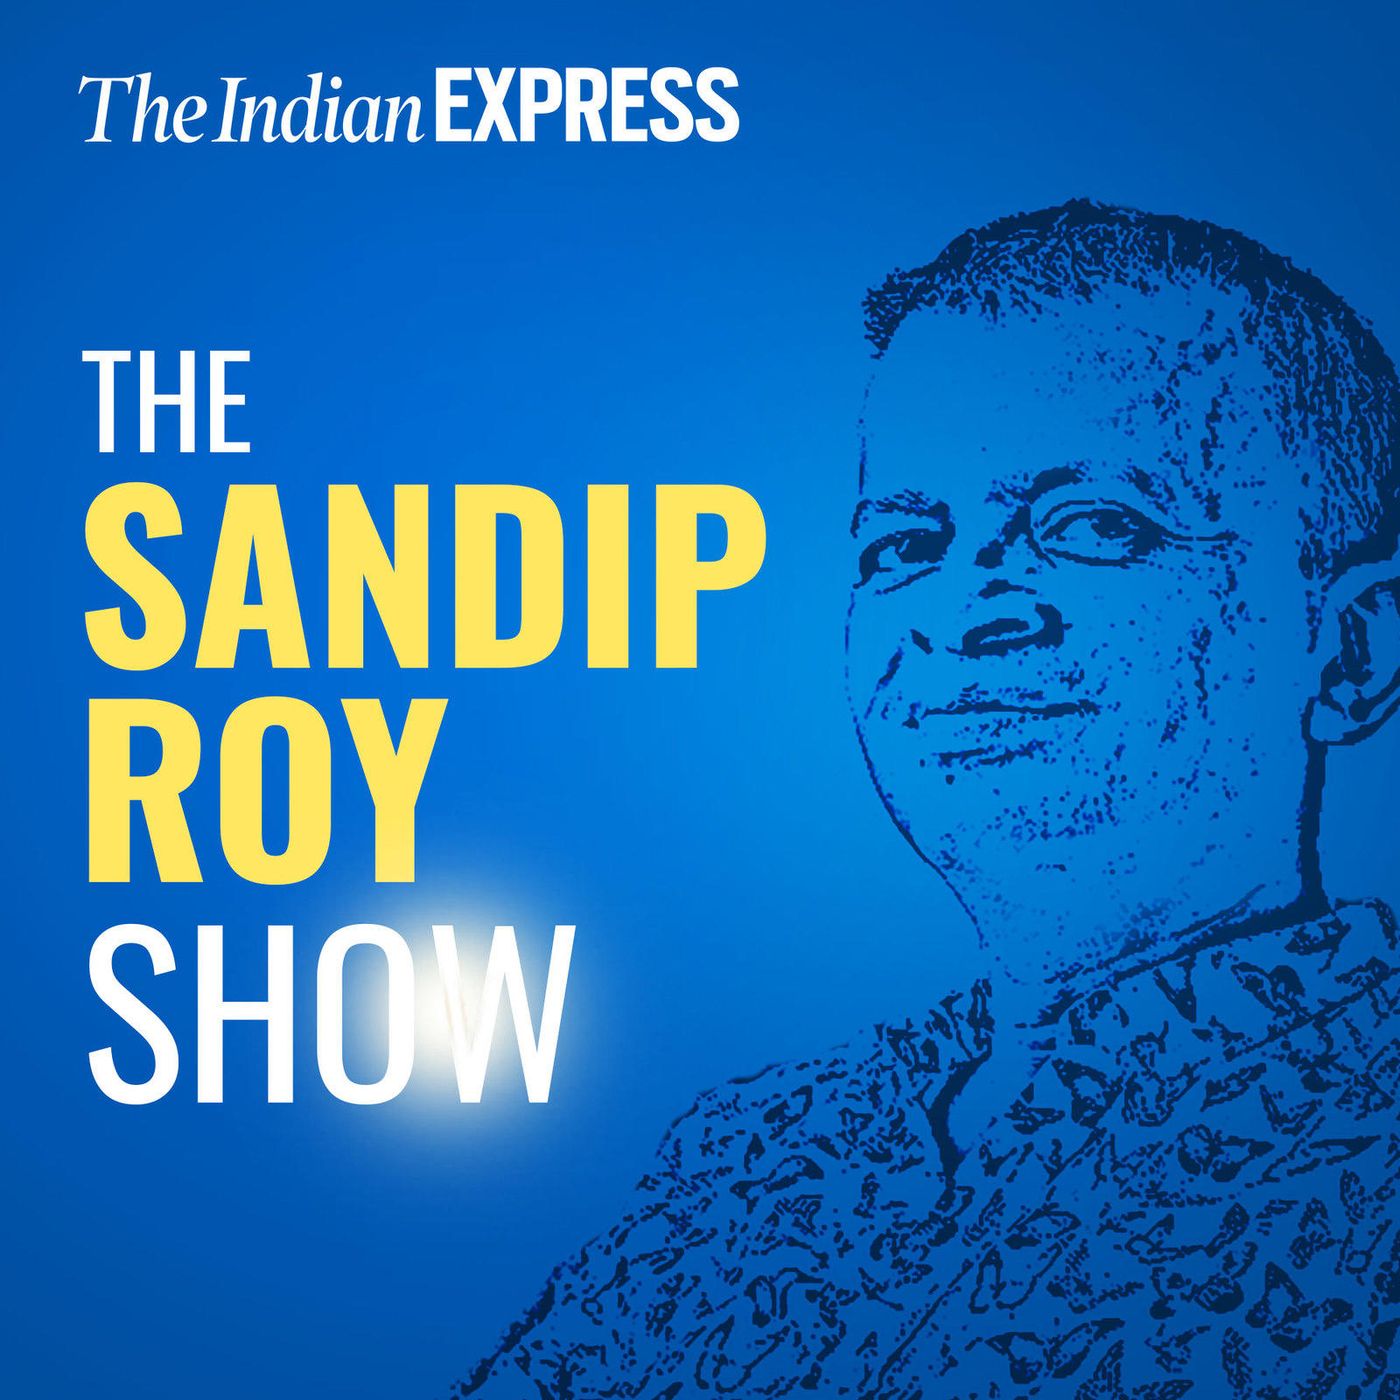 The Sandip Roy Show